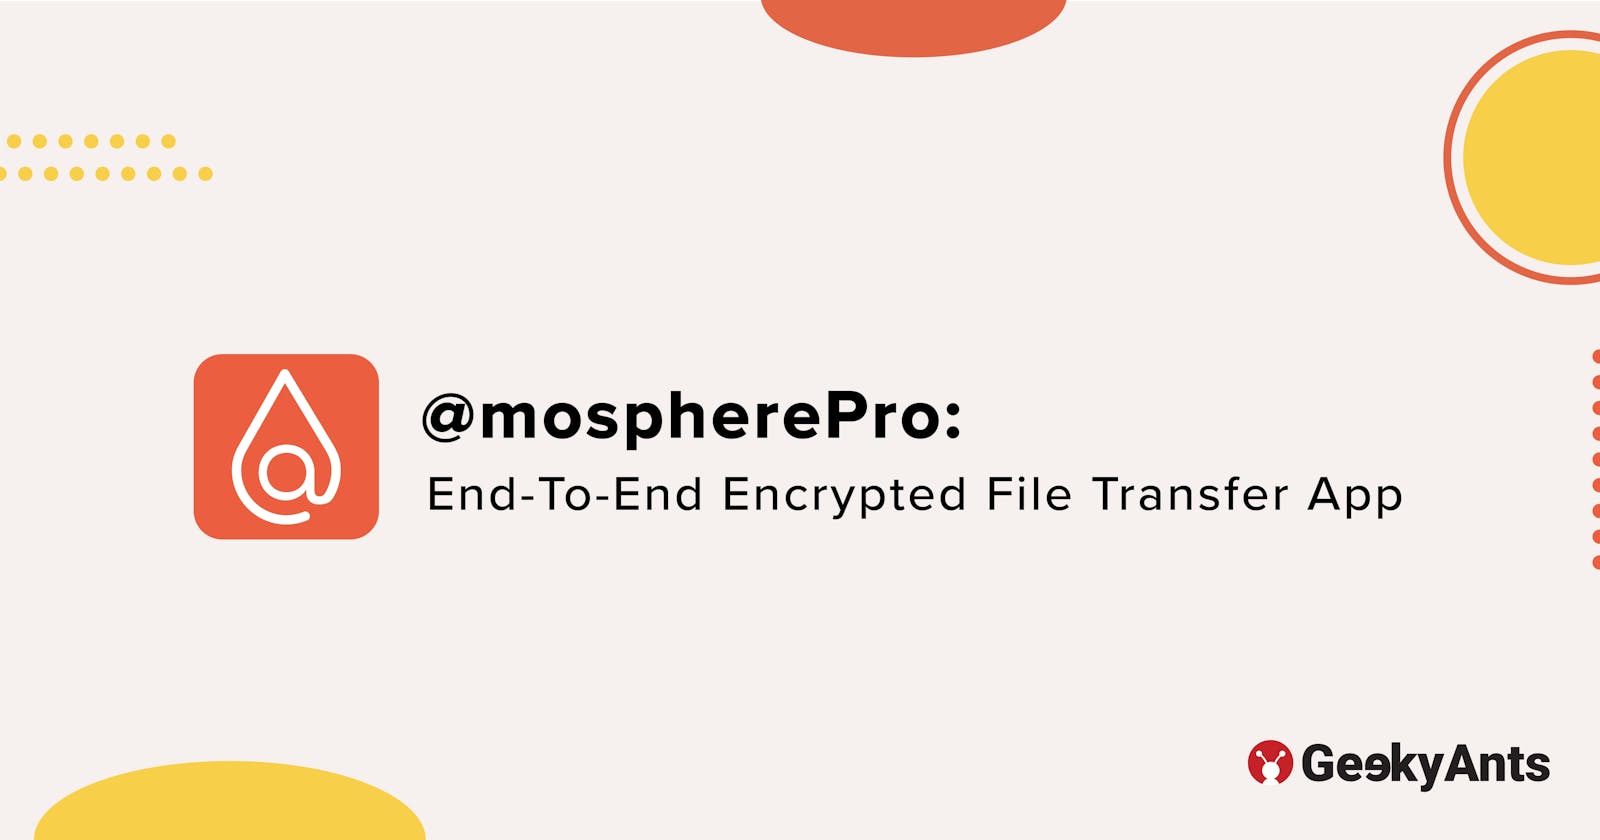 @mospherePro: End-To-End Encrypted File Transfer App